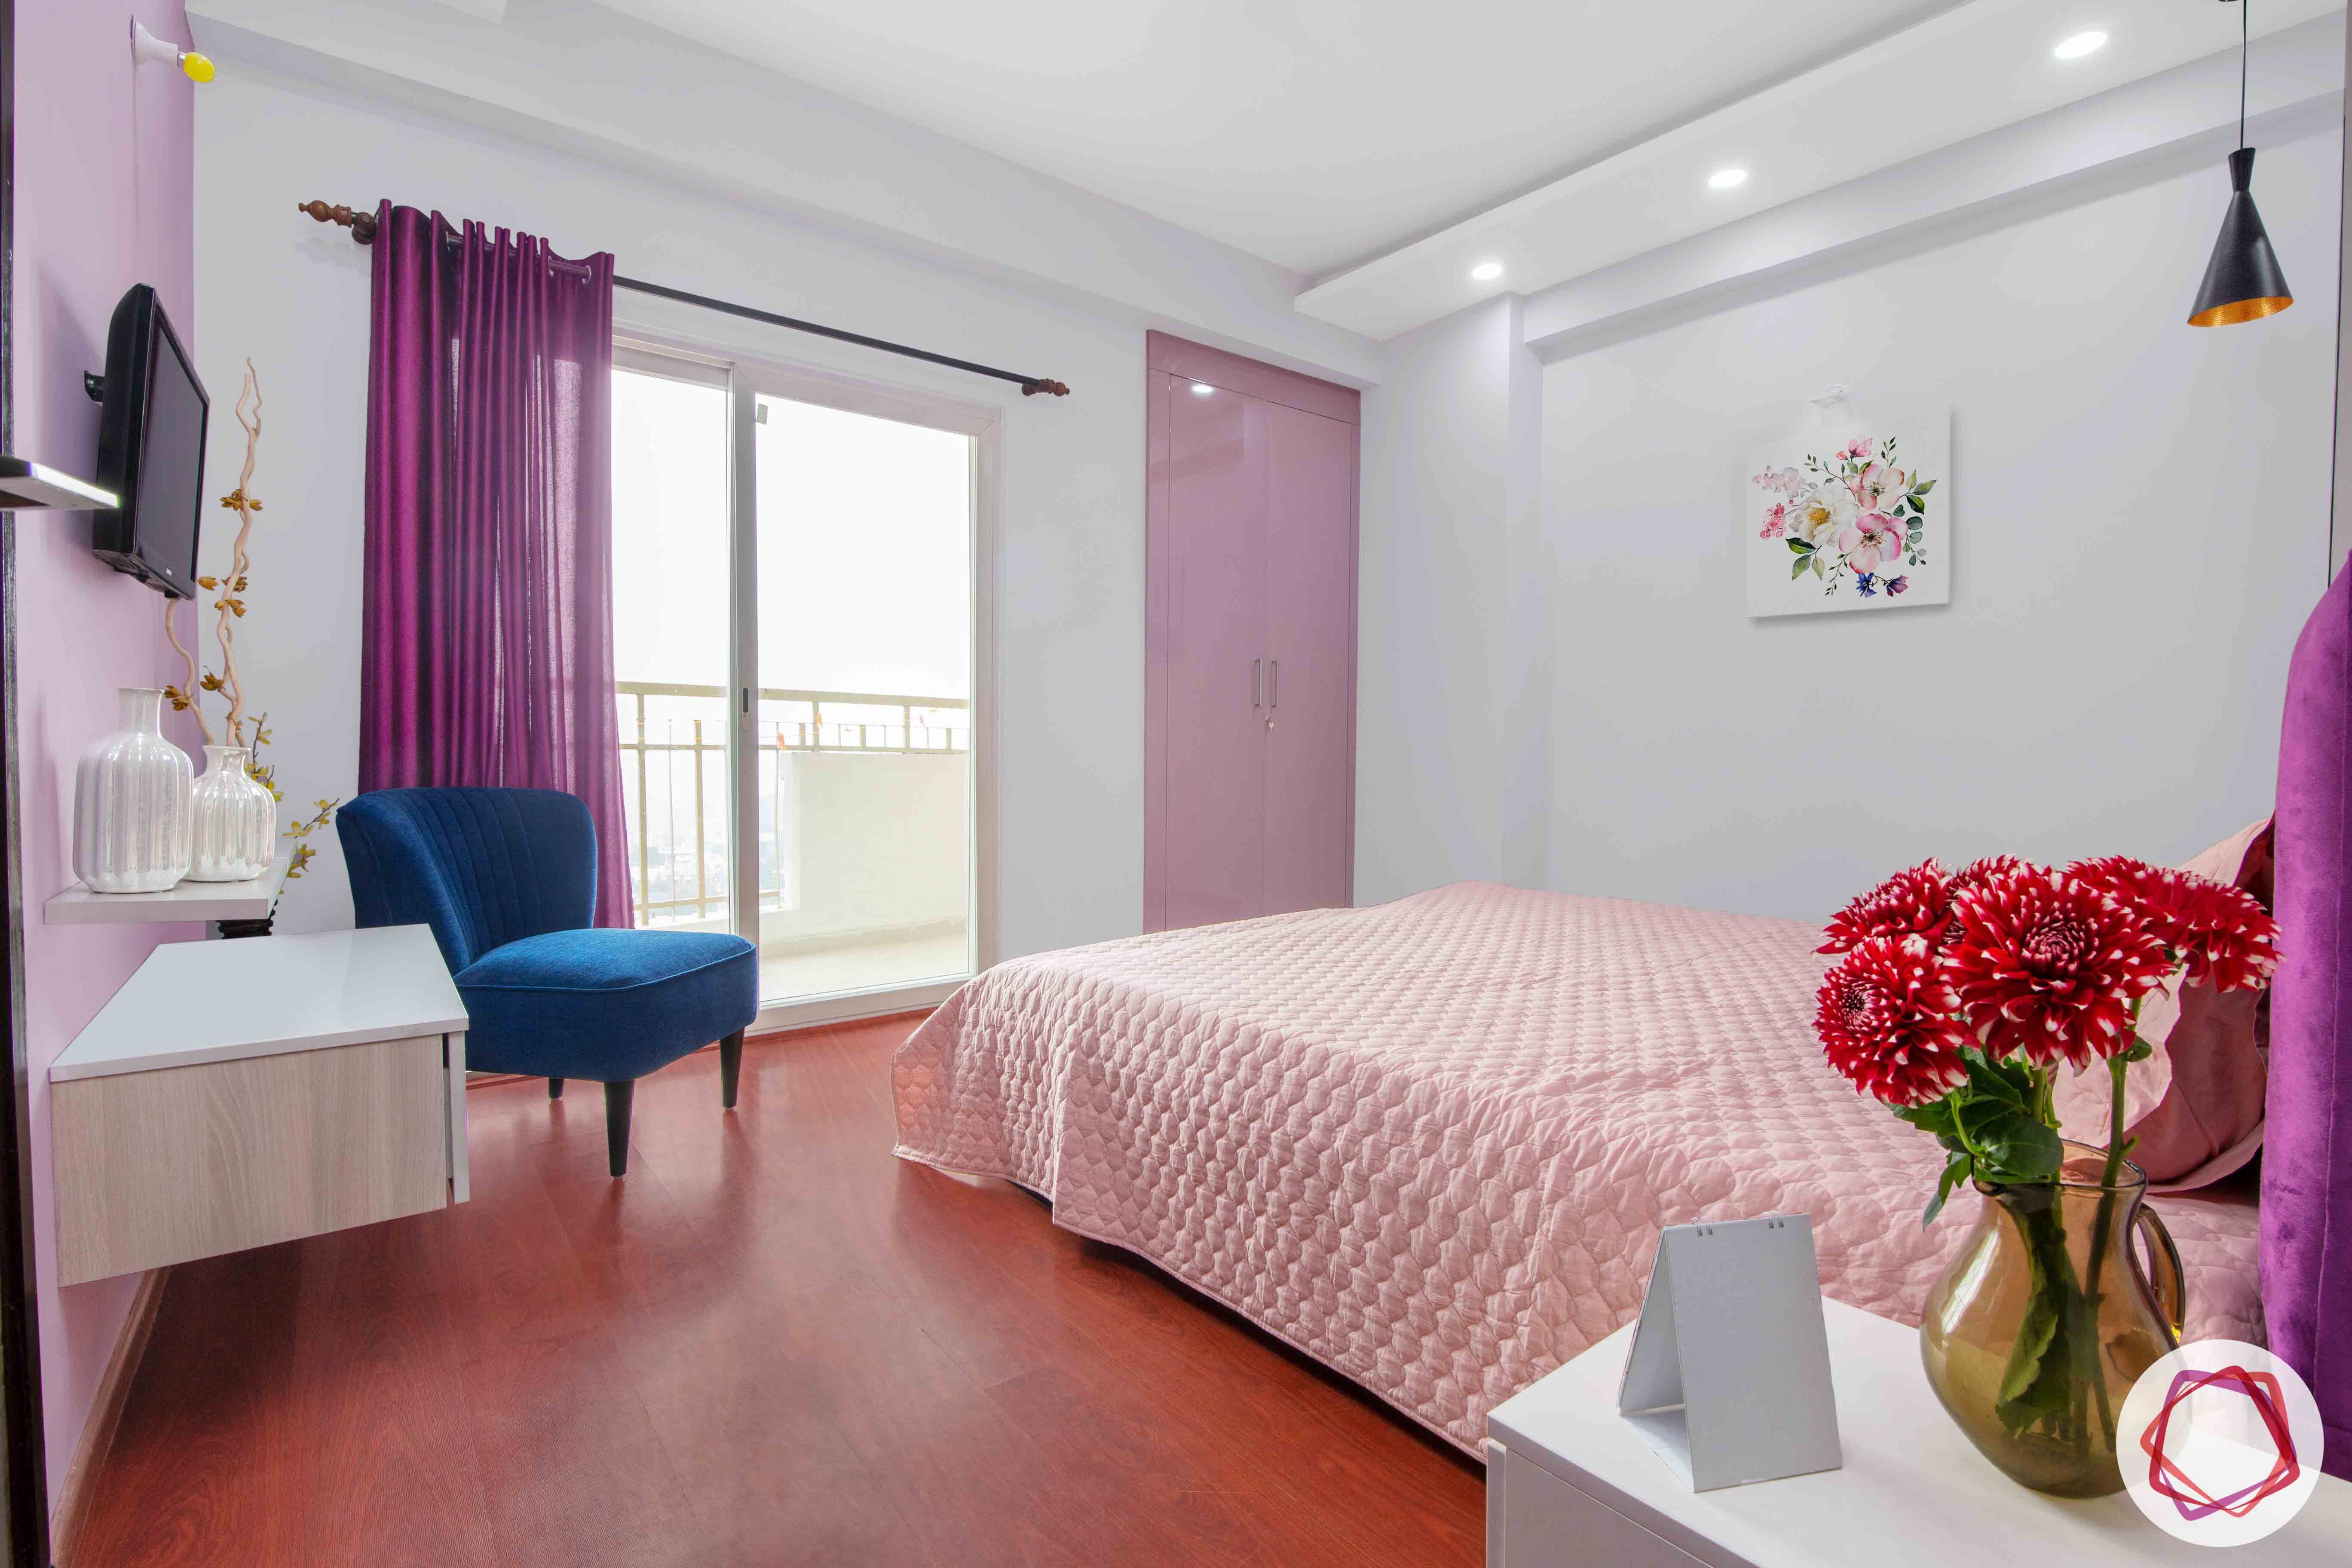 3bhk flat interior design-pink wardrobe designs-purple drape designs